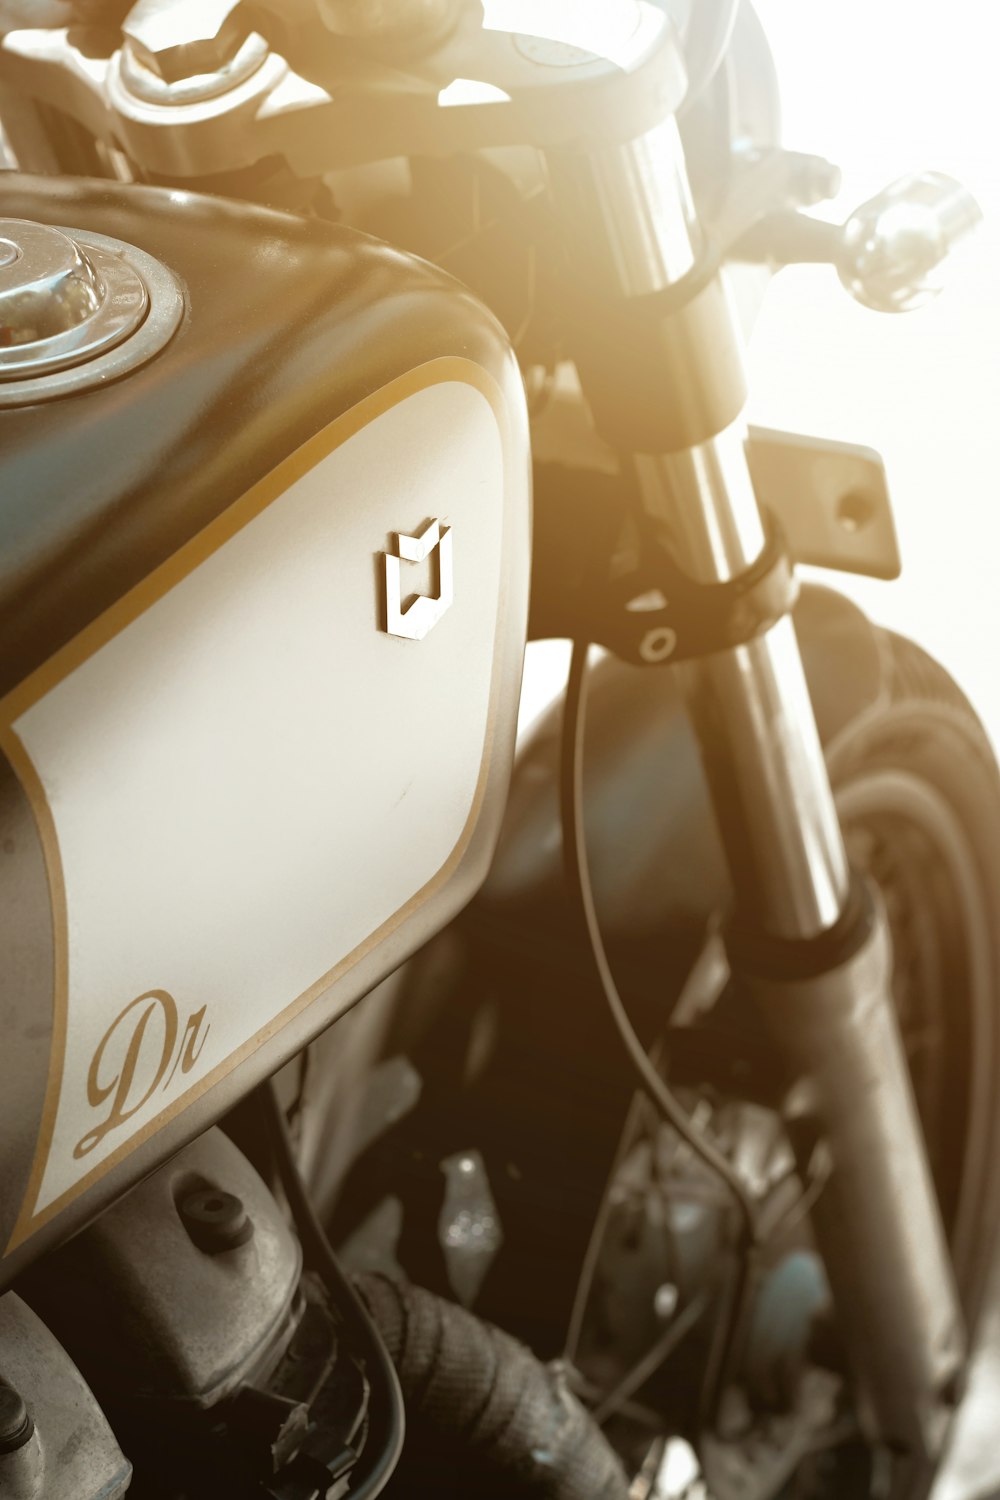 a close up of a motorcycle's handlebars